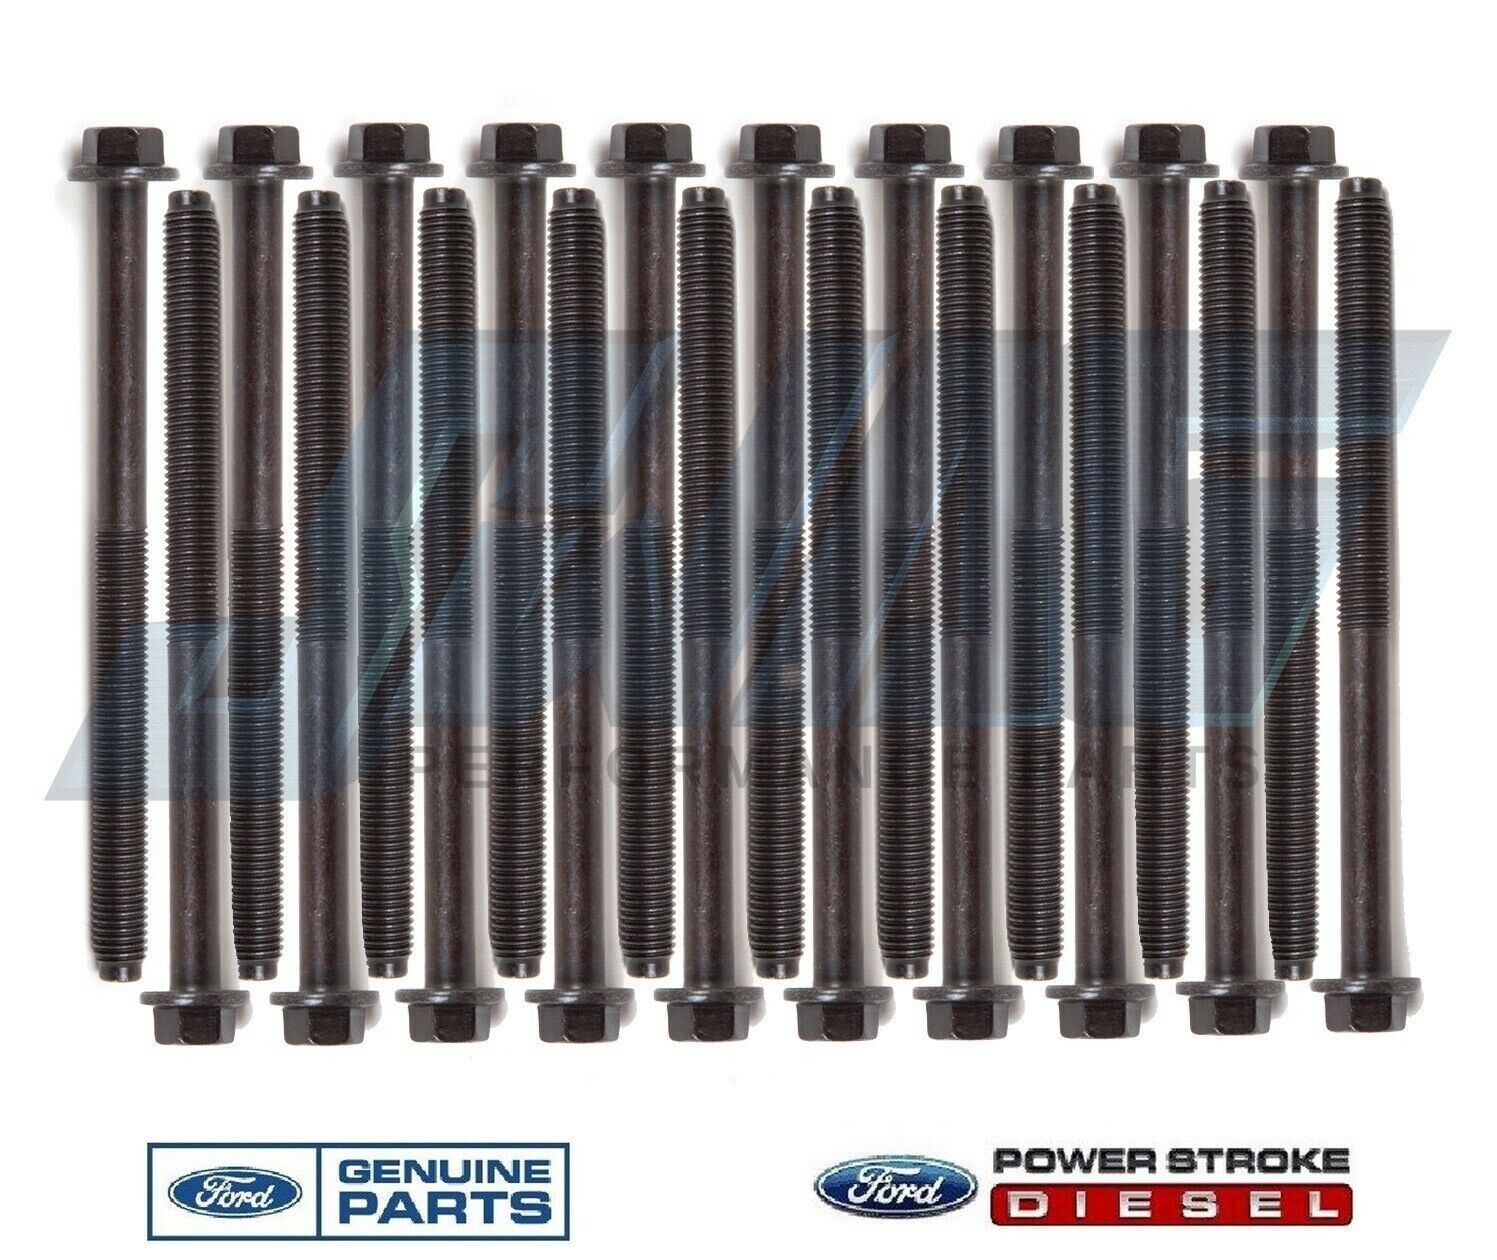 Genuine Ford OEM 6.0 6.0L Powerstroke Diesel Cylinder Head Bolts VT365 (2 SETS)